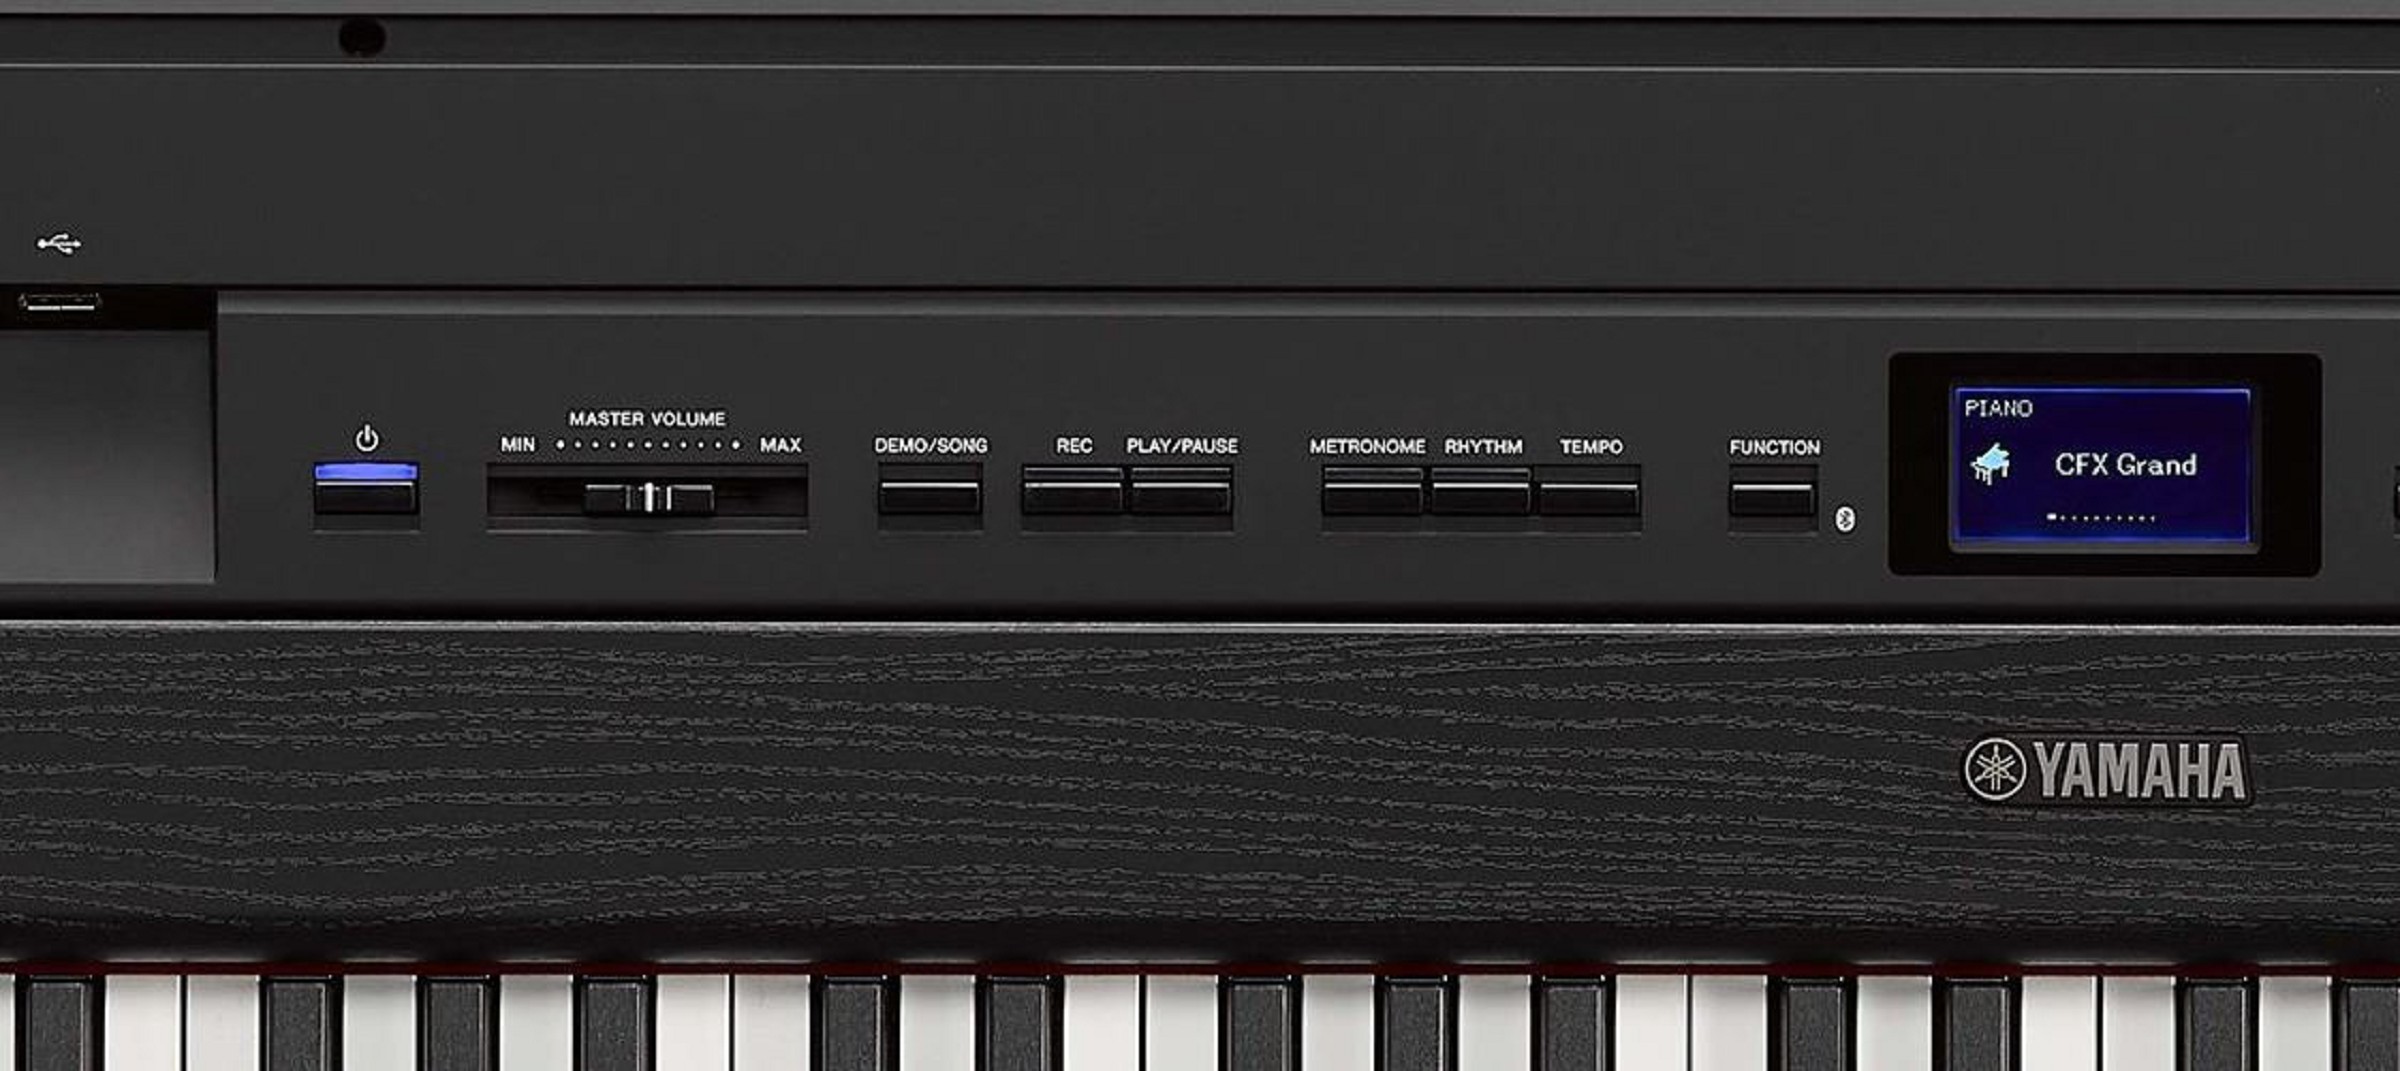 Yamaha P 515 B Piano schwarz